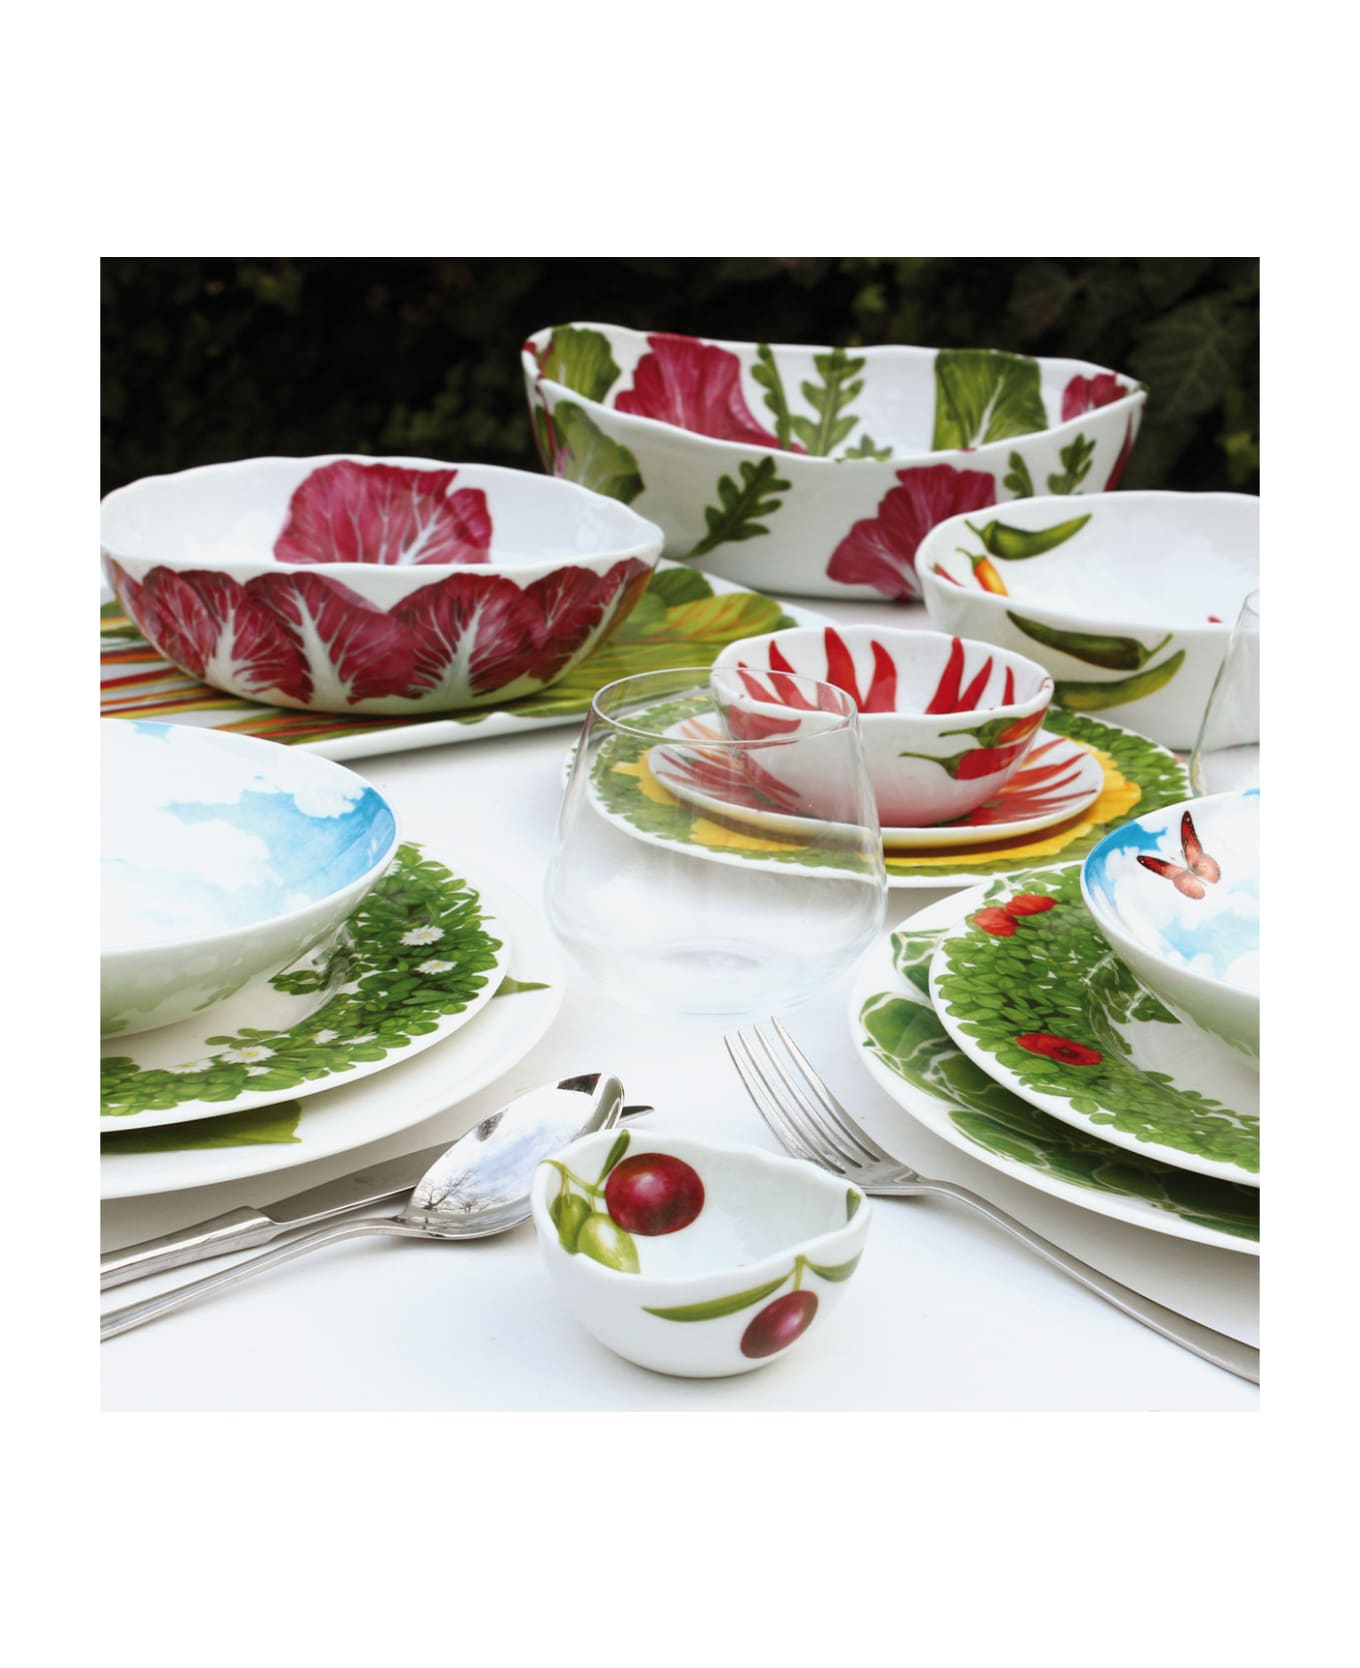 Taitù Set of 4 Small Bowls PEPERONCINI - Dieta Mediterranea Vegetables Collection - Red